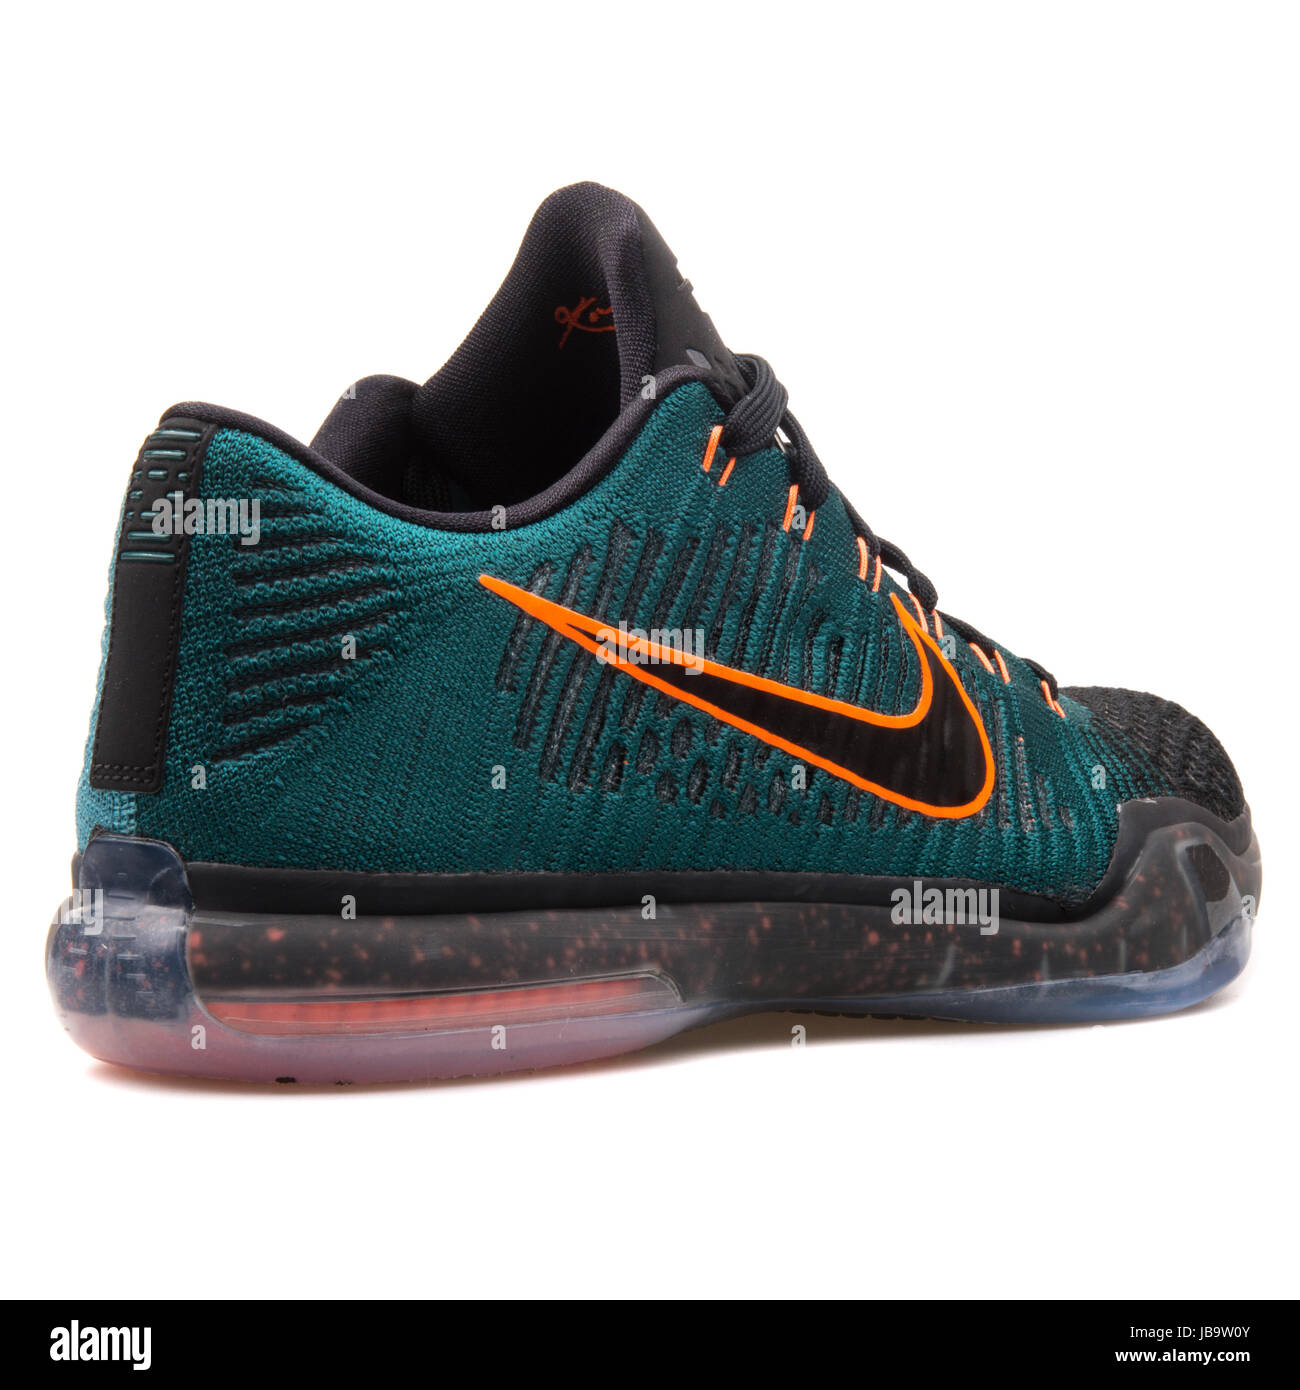 Nike Kobe X Elite niedrig schwarz, grün und Orange Herren Basketball-Schuhe  - 747212-303 Stockfotografie - Alamy